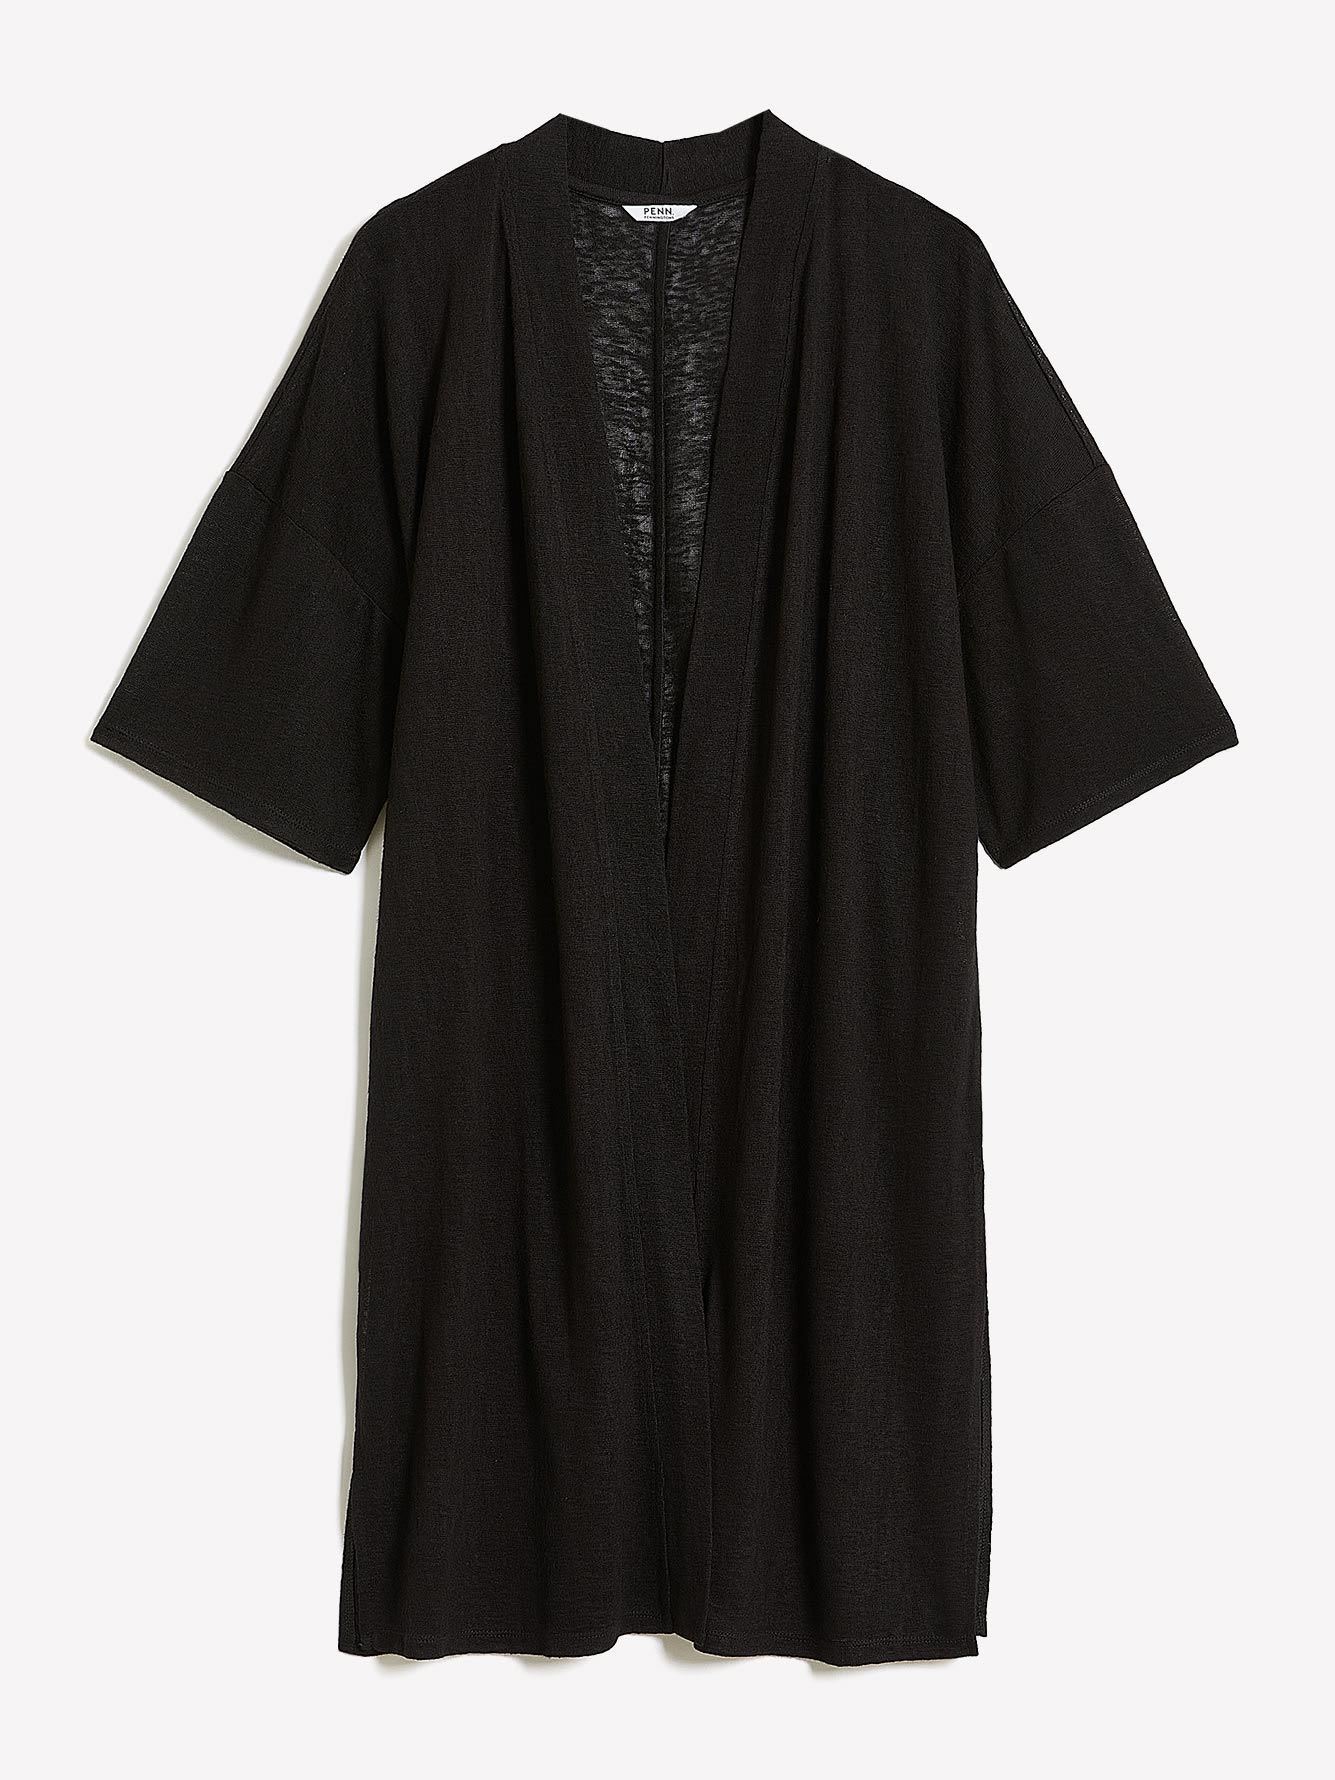 Long Black Cardigan with Kimono Sleeves